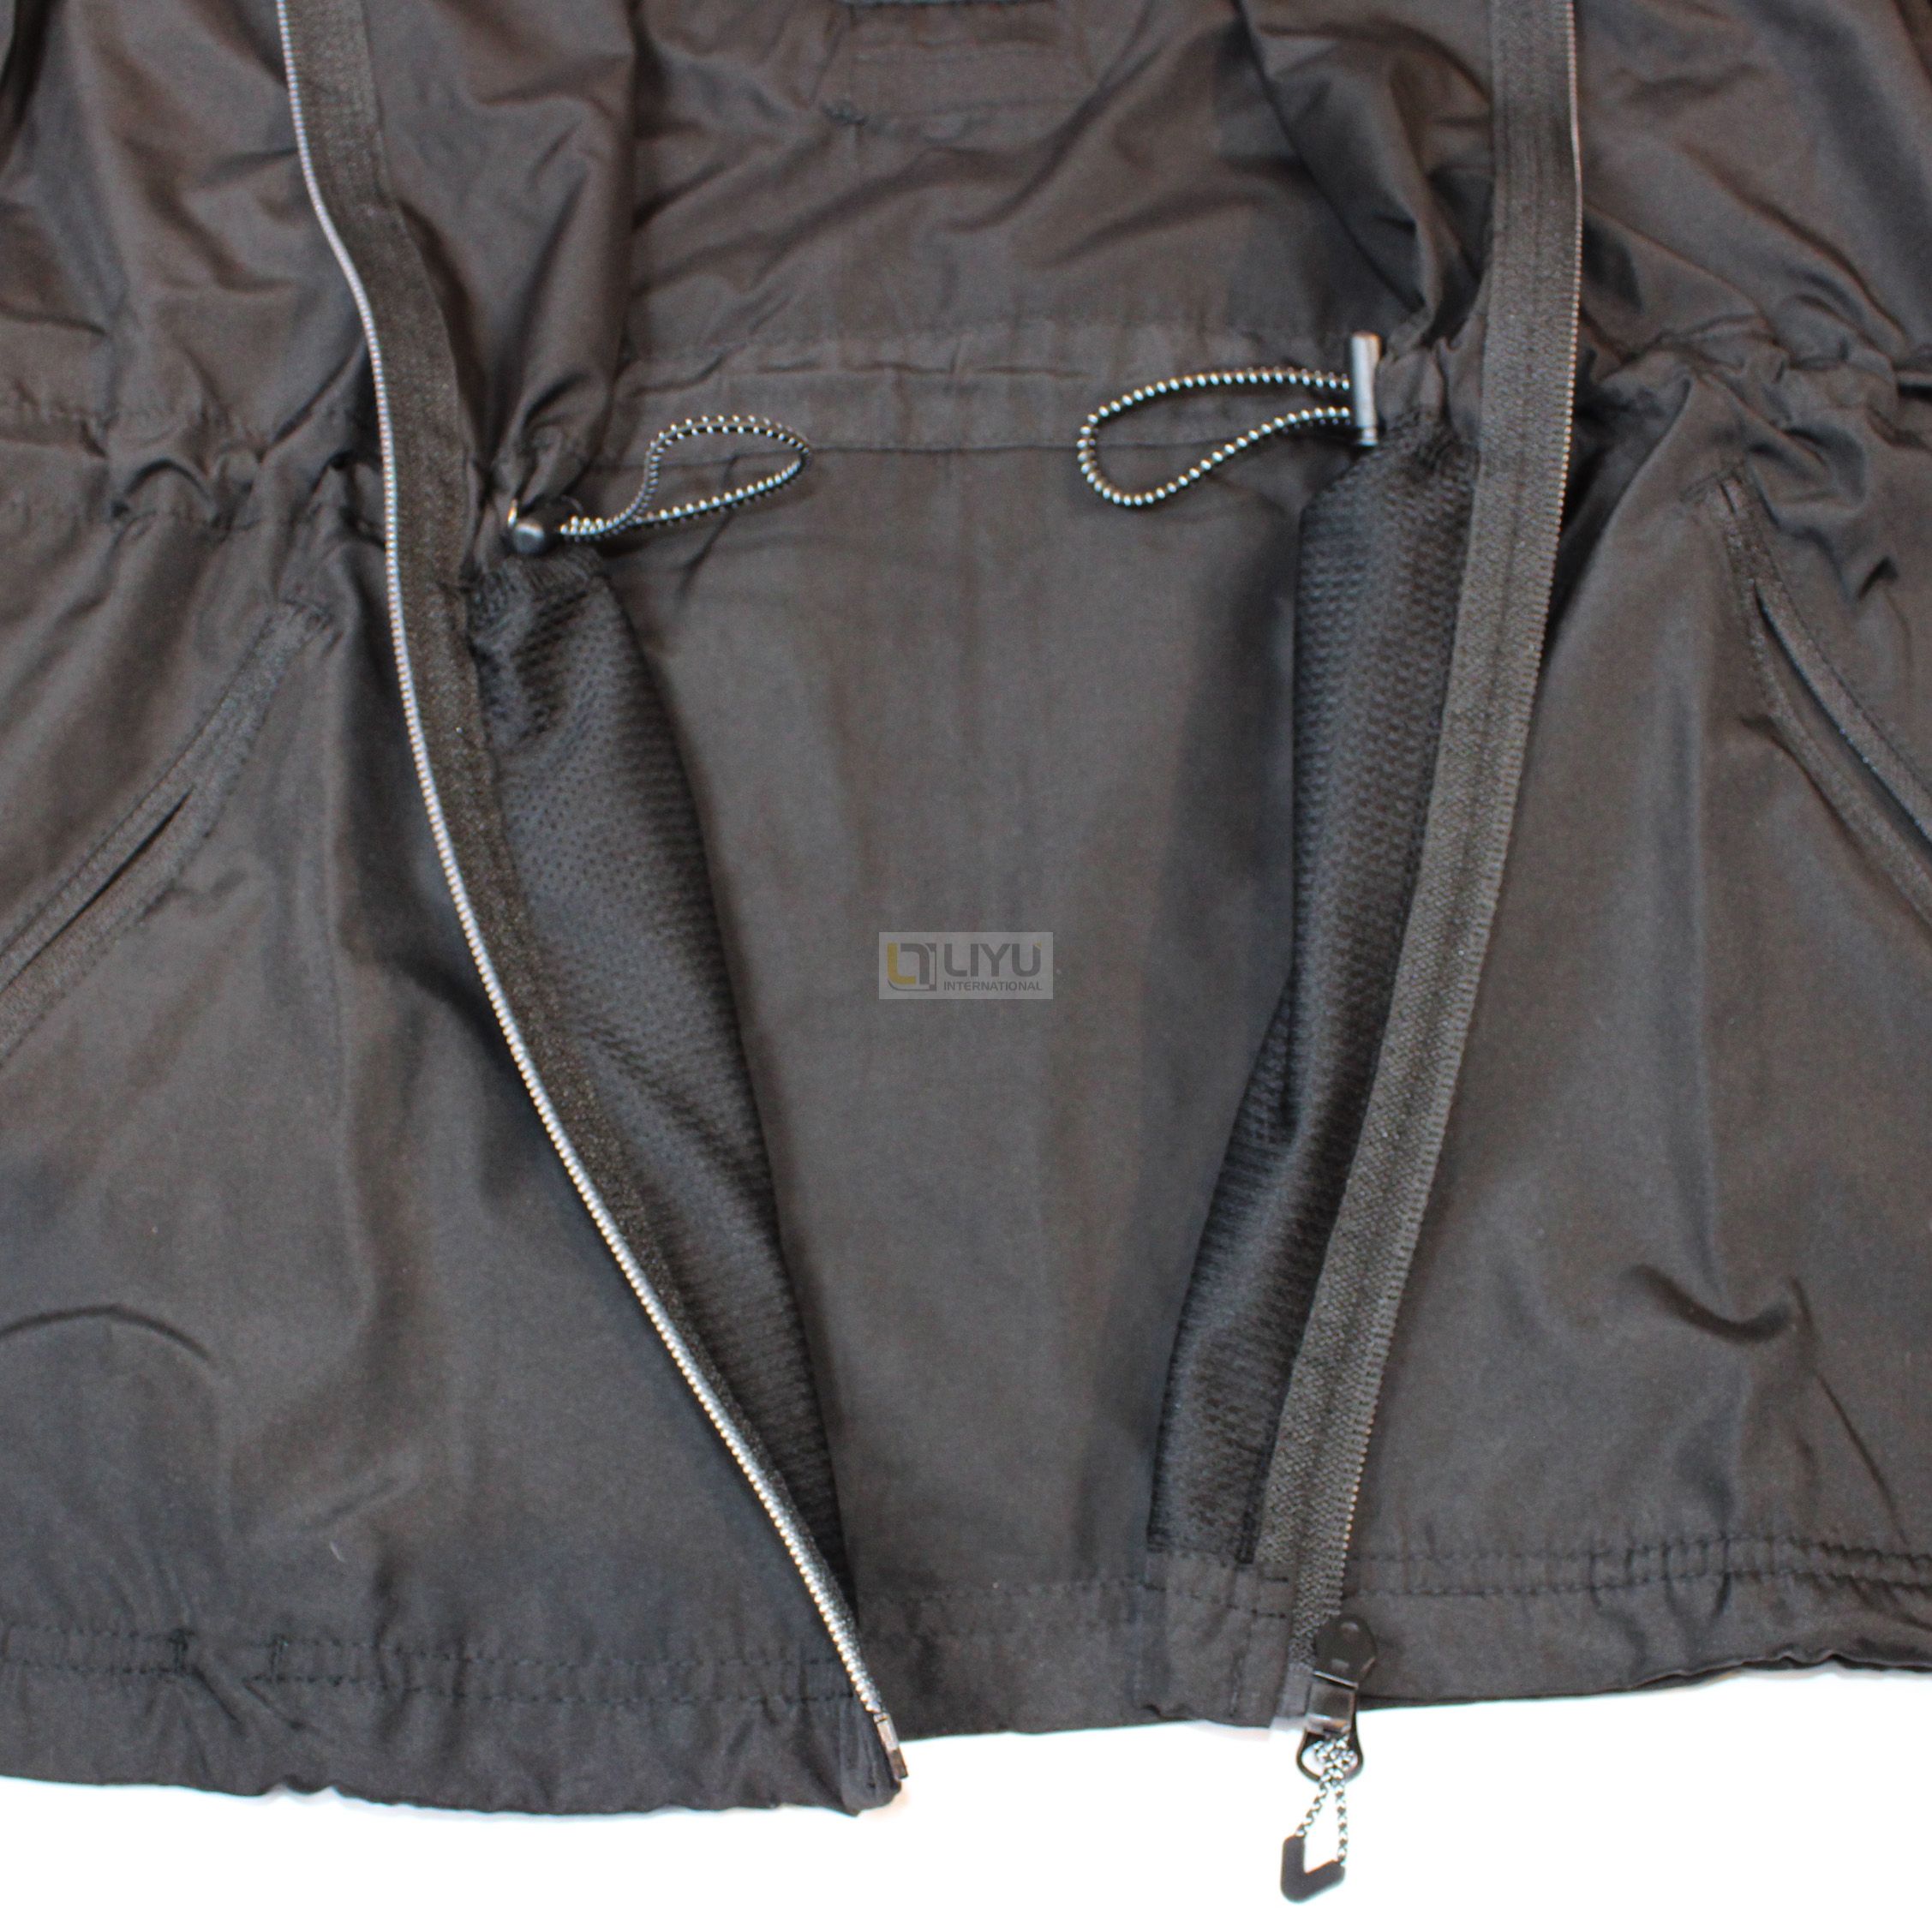 Hooded Windbreaker Jacket Light Weight Rain Coats